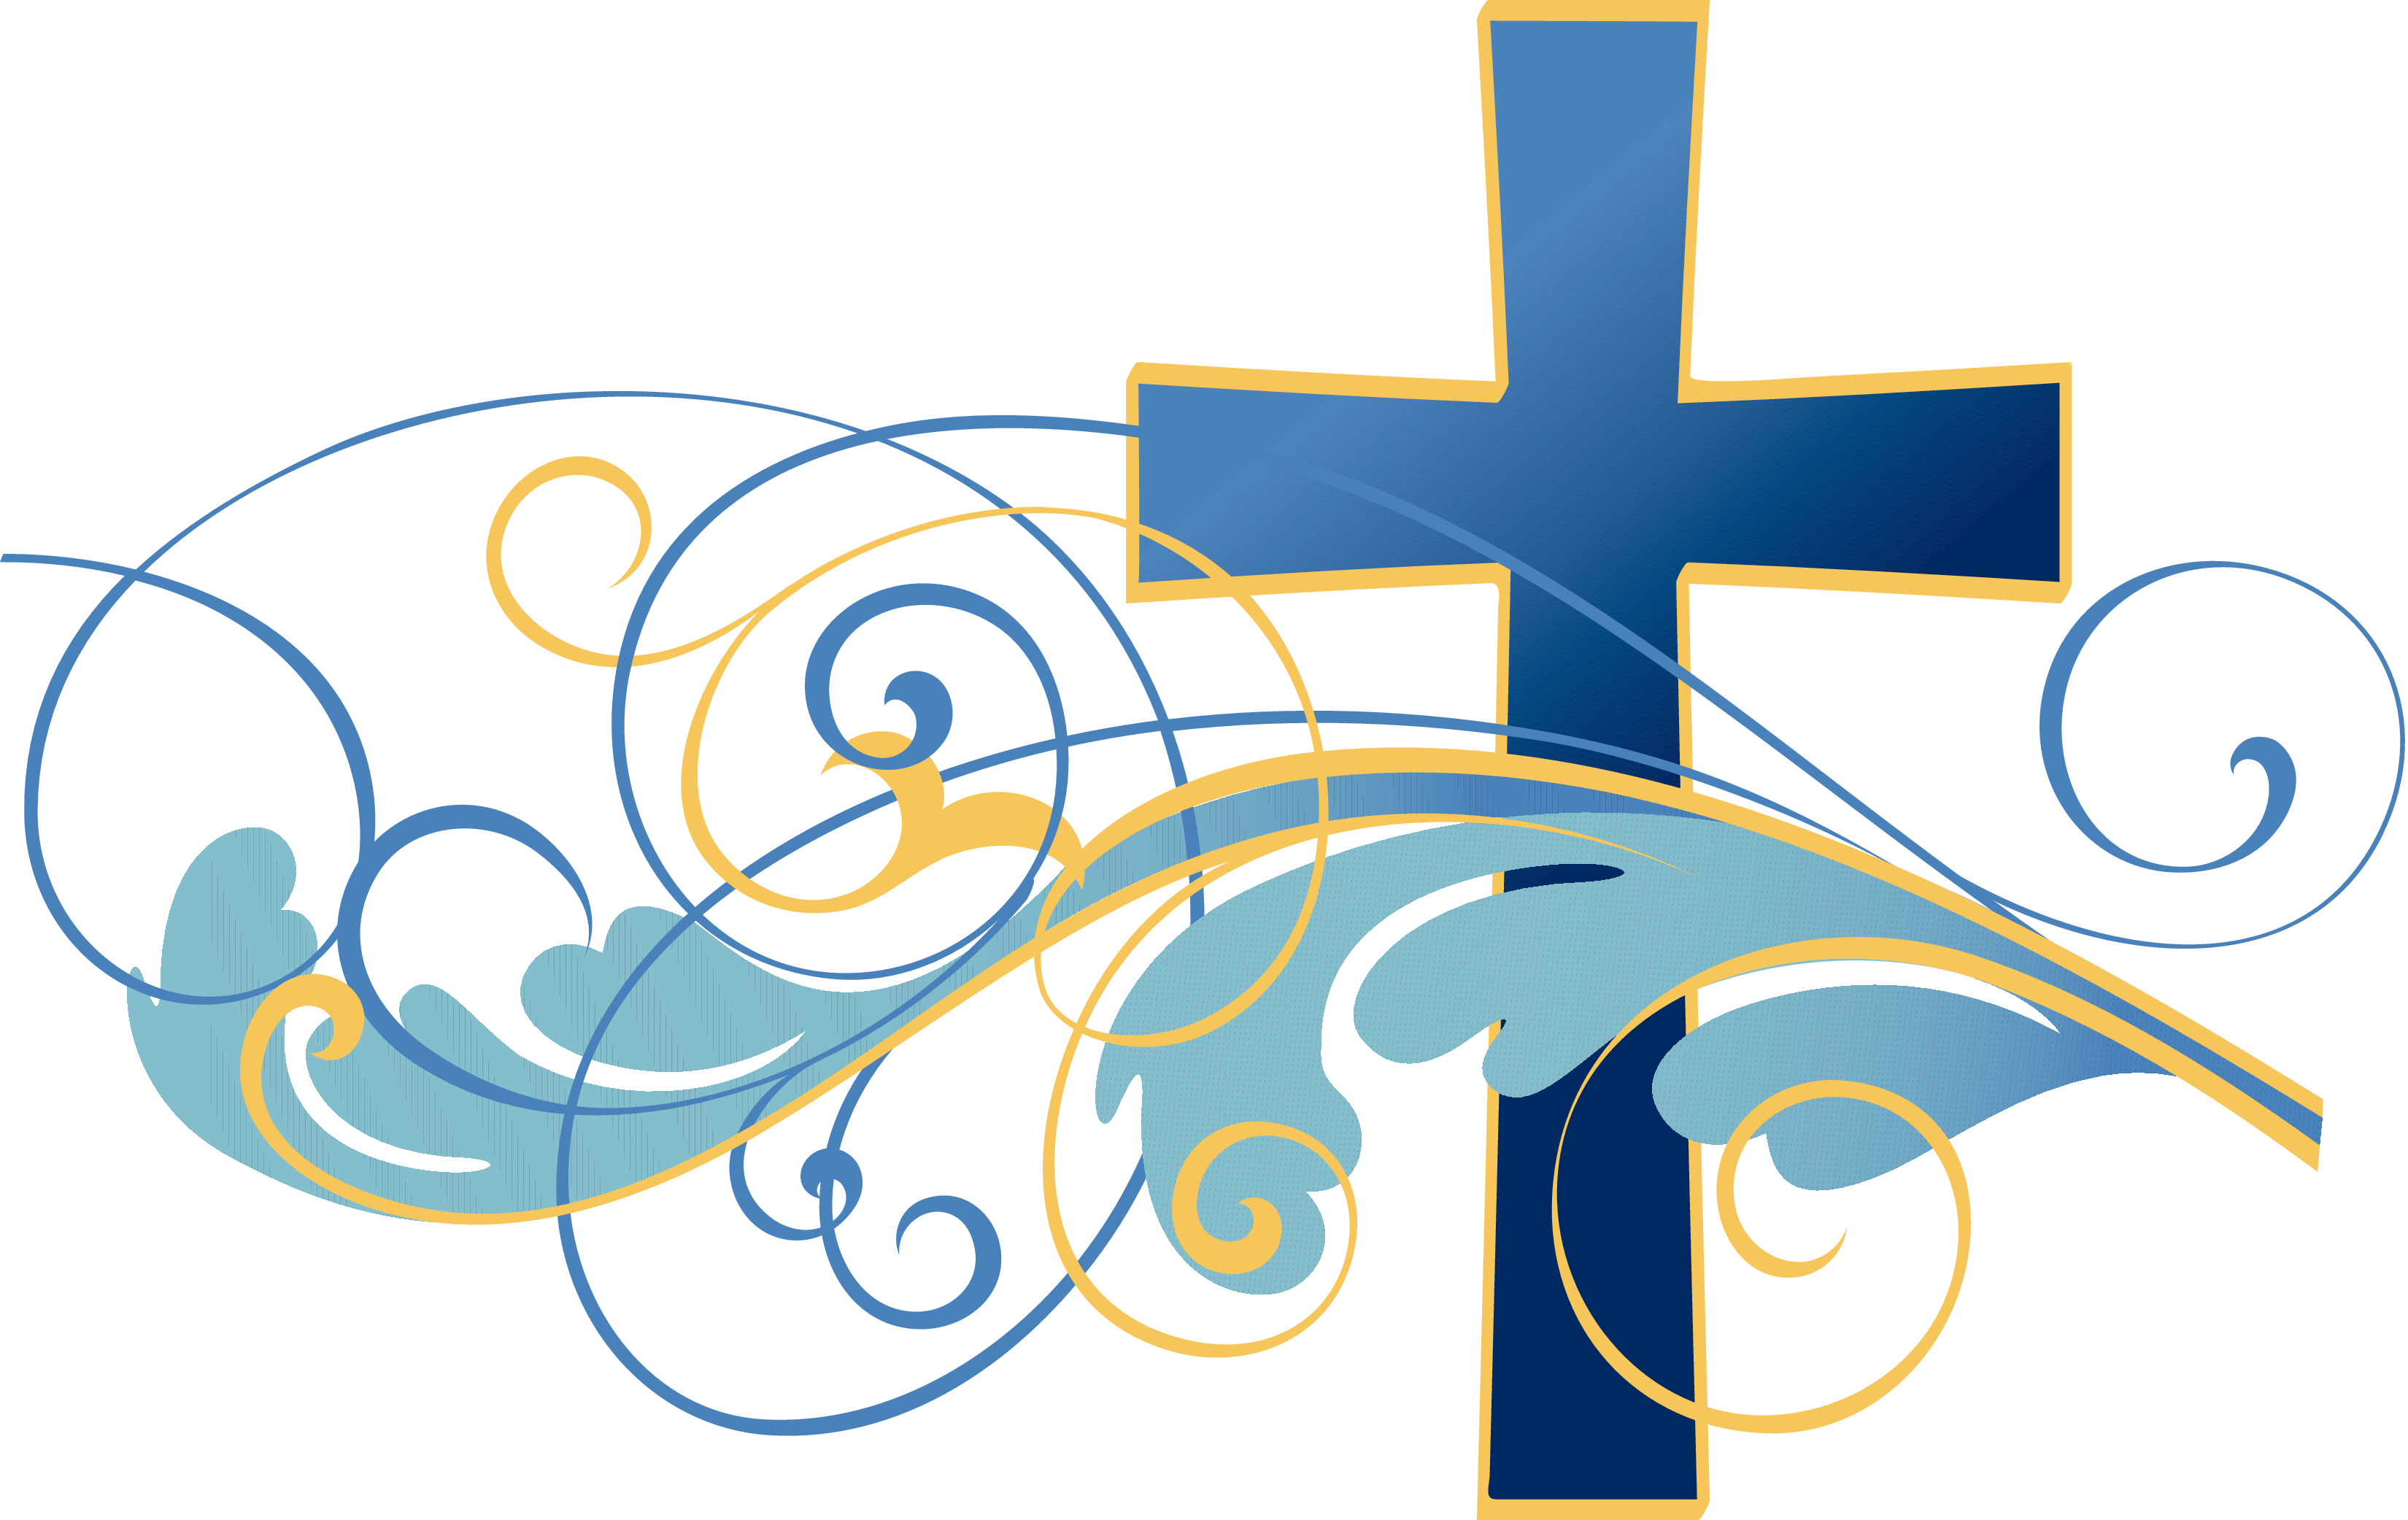 Christian Crosses Clip Art Free